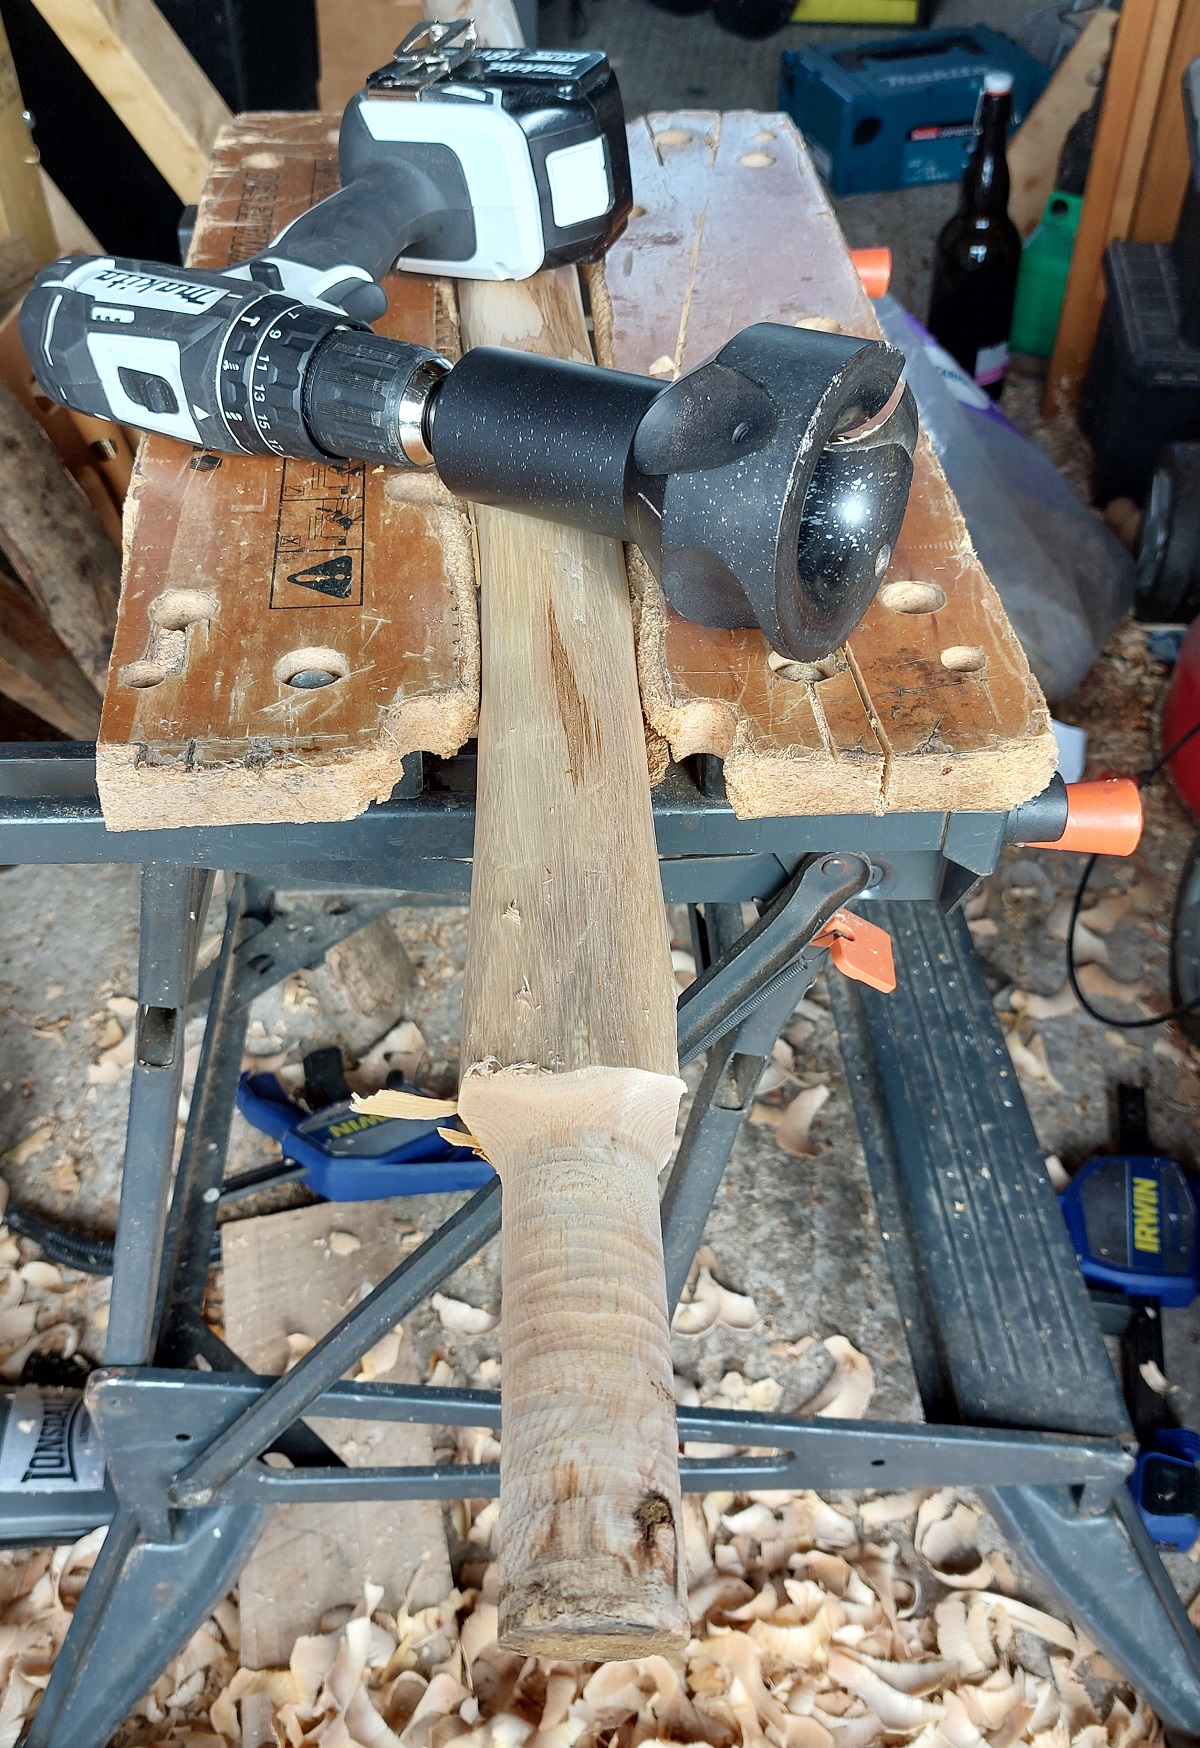 Tenon cutter and pole-lathe leg in a workbench